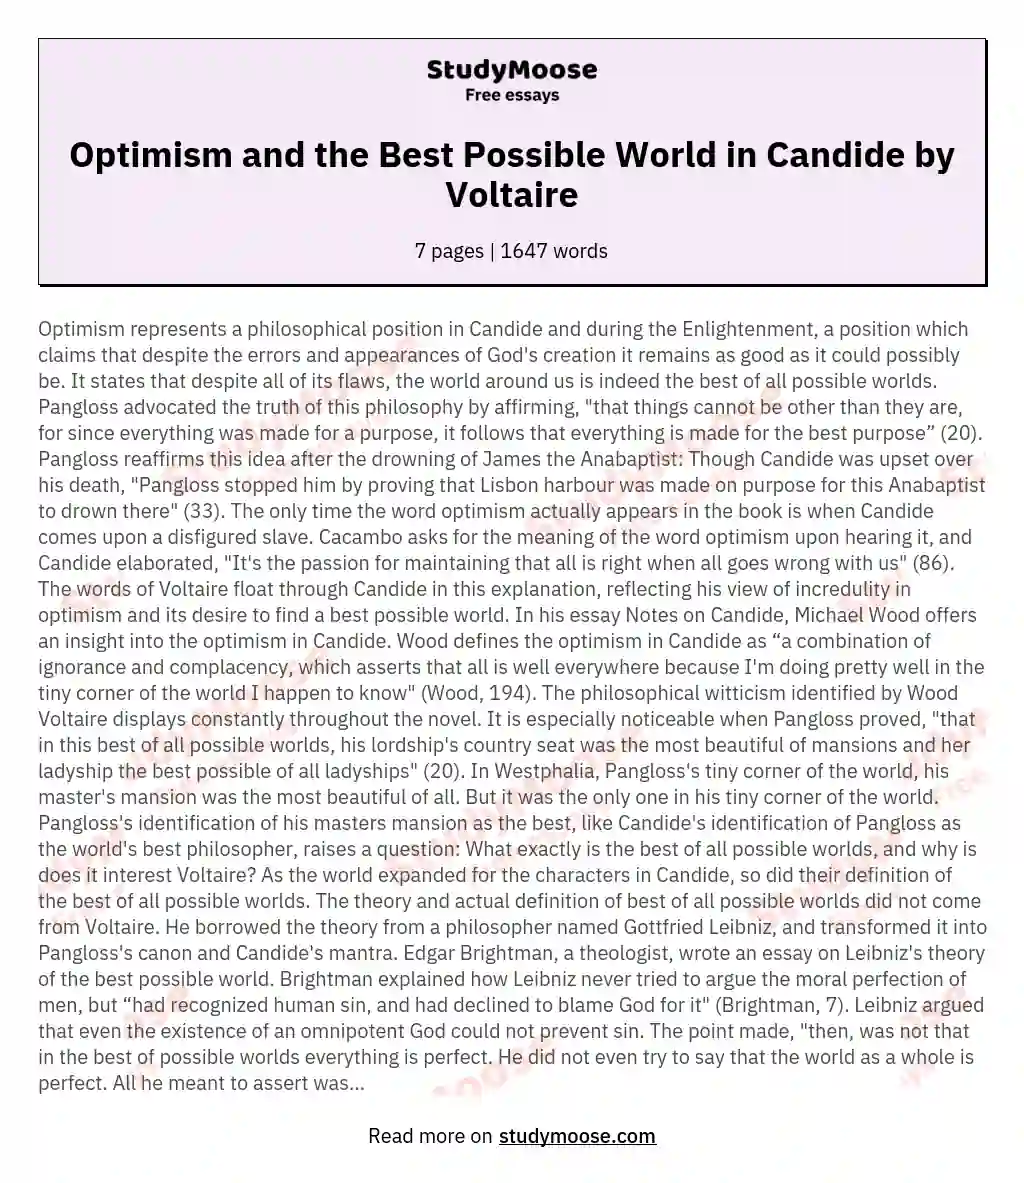 candide optimism essay